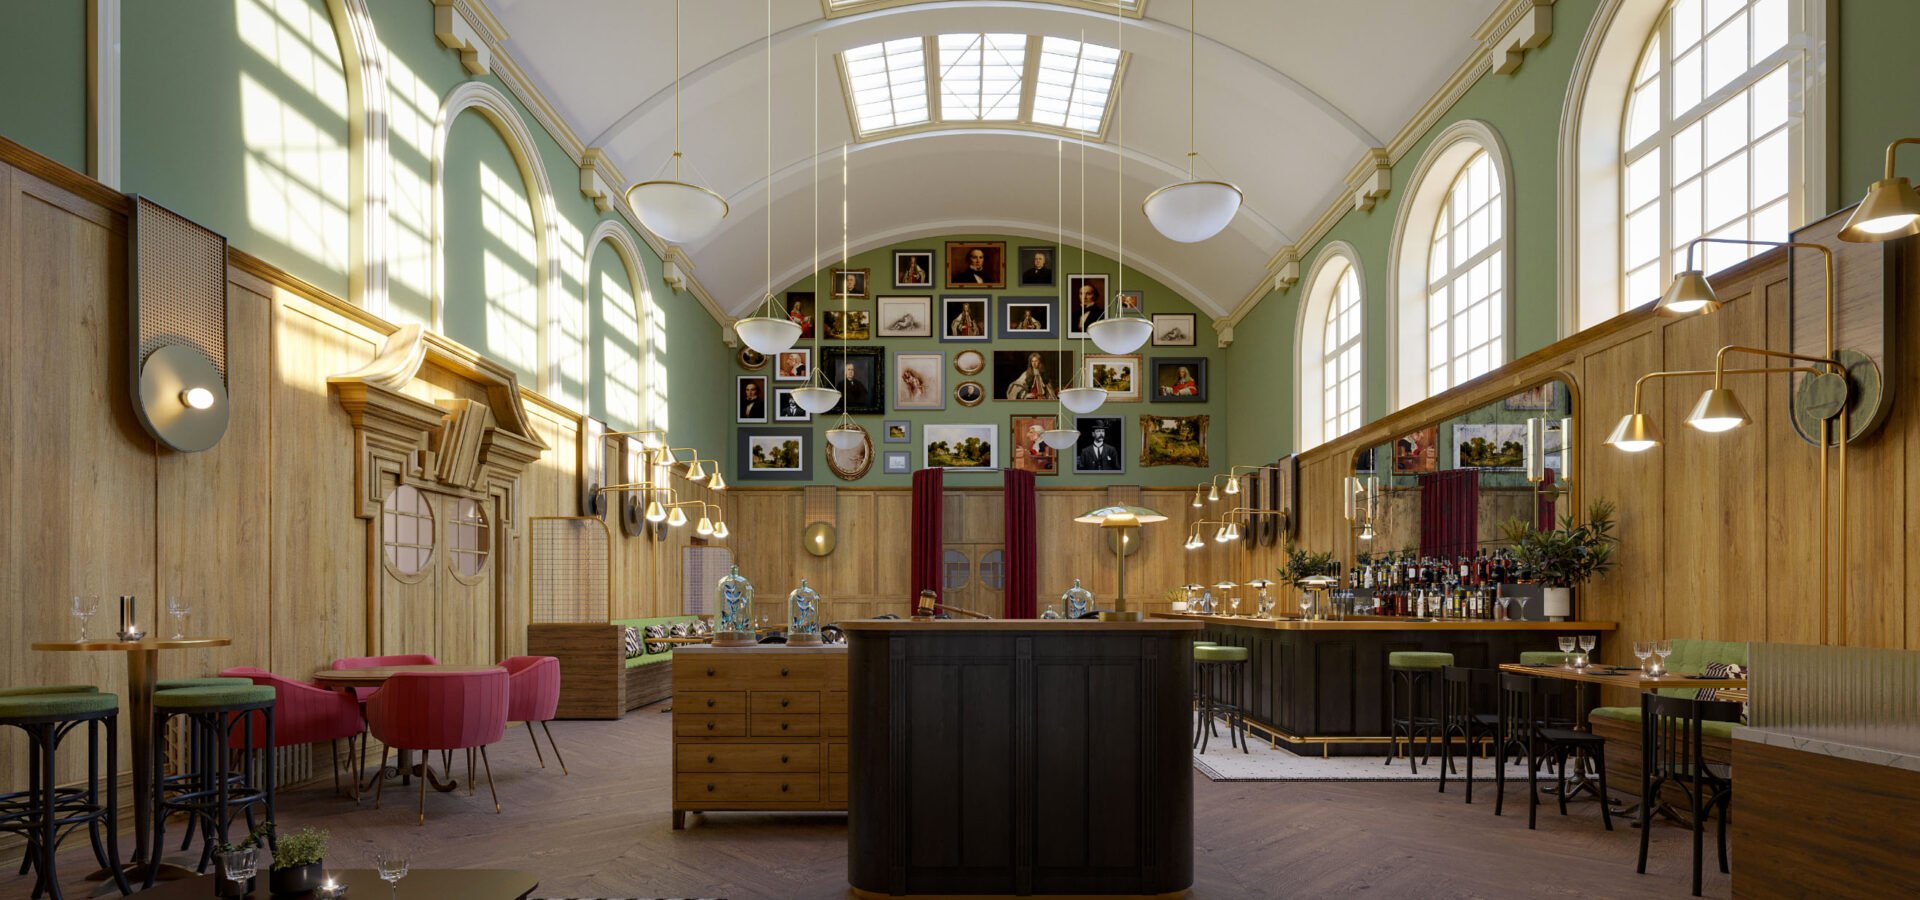 Interior of Clockwise - Bromley